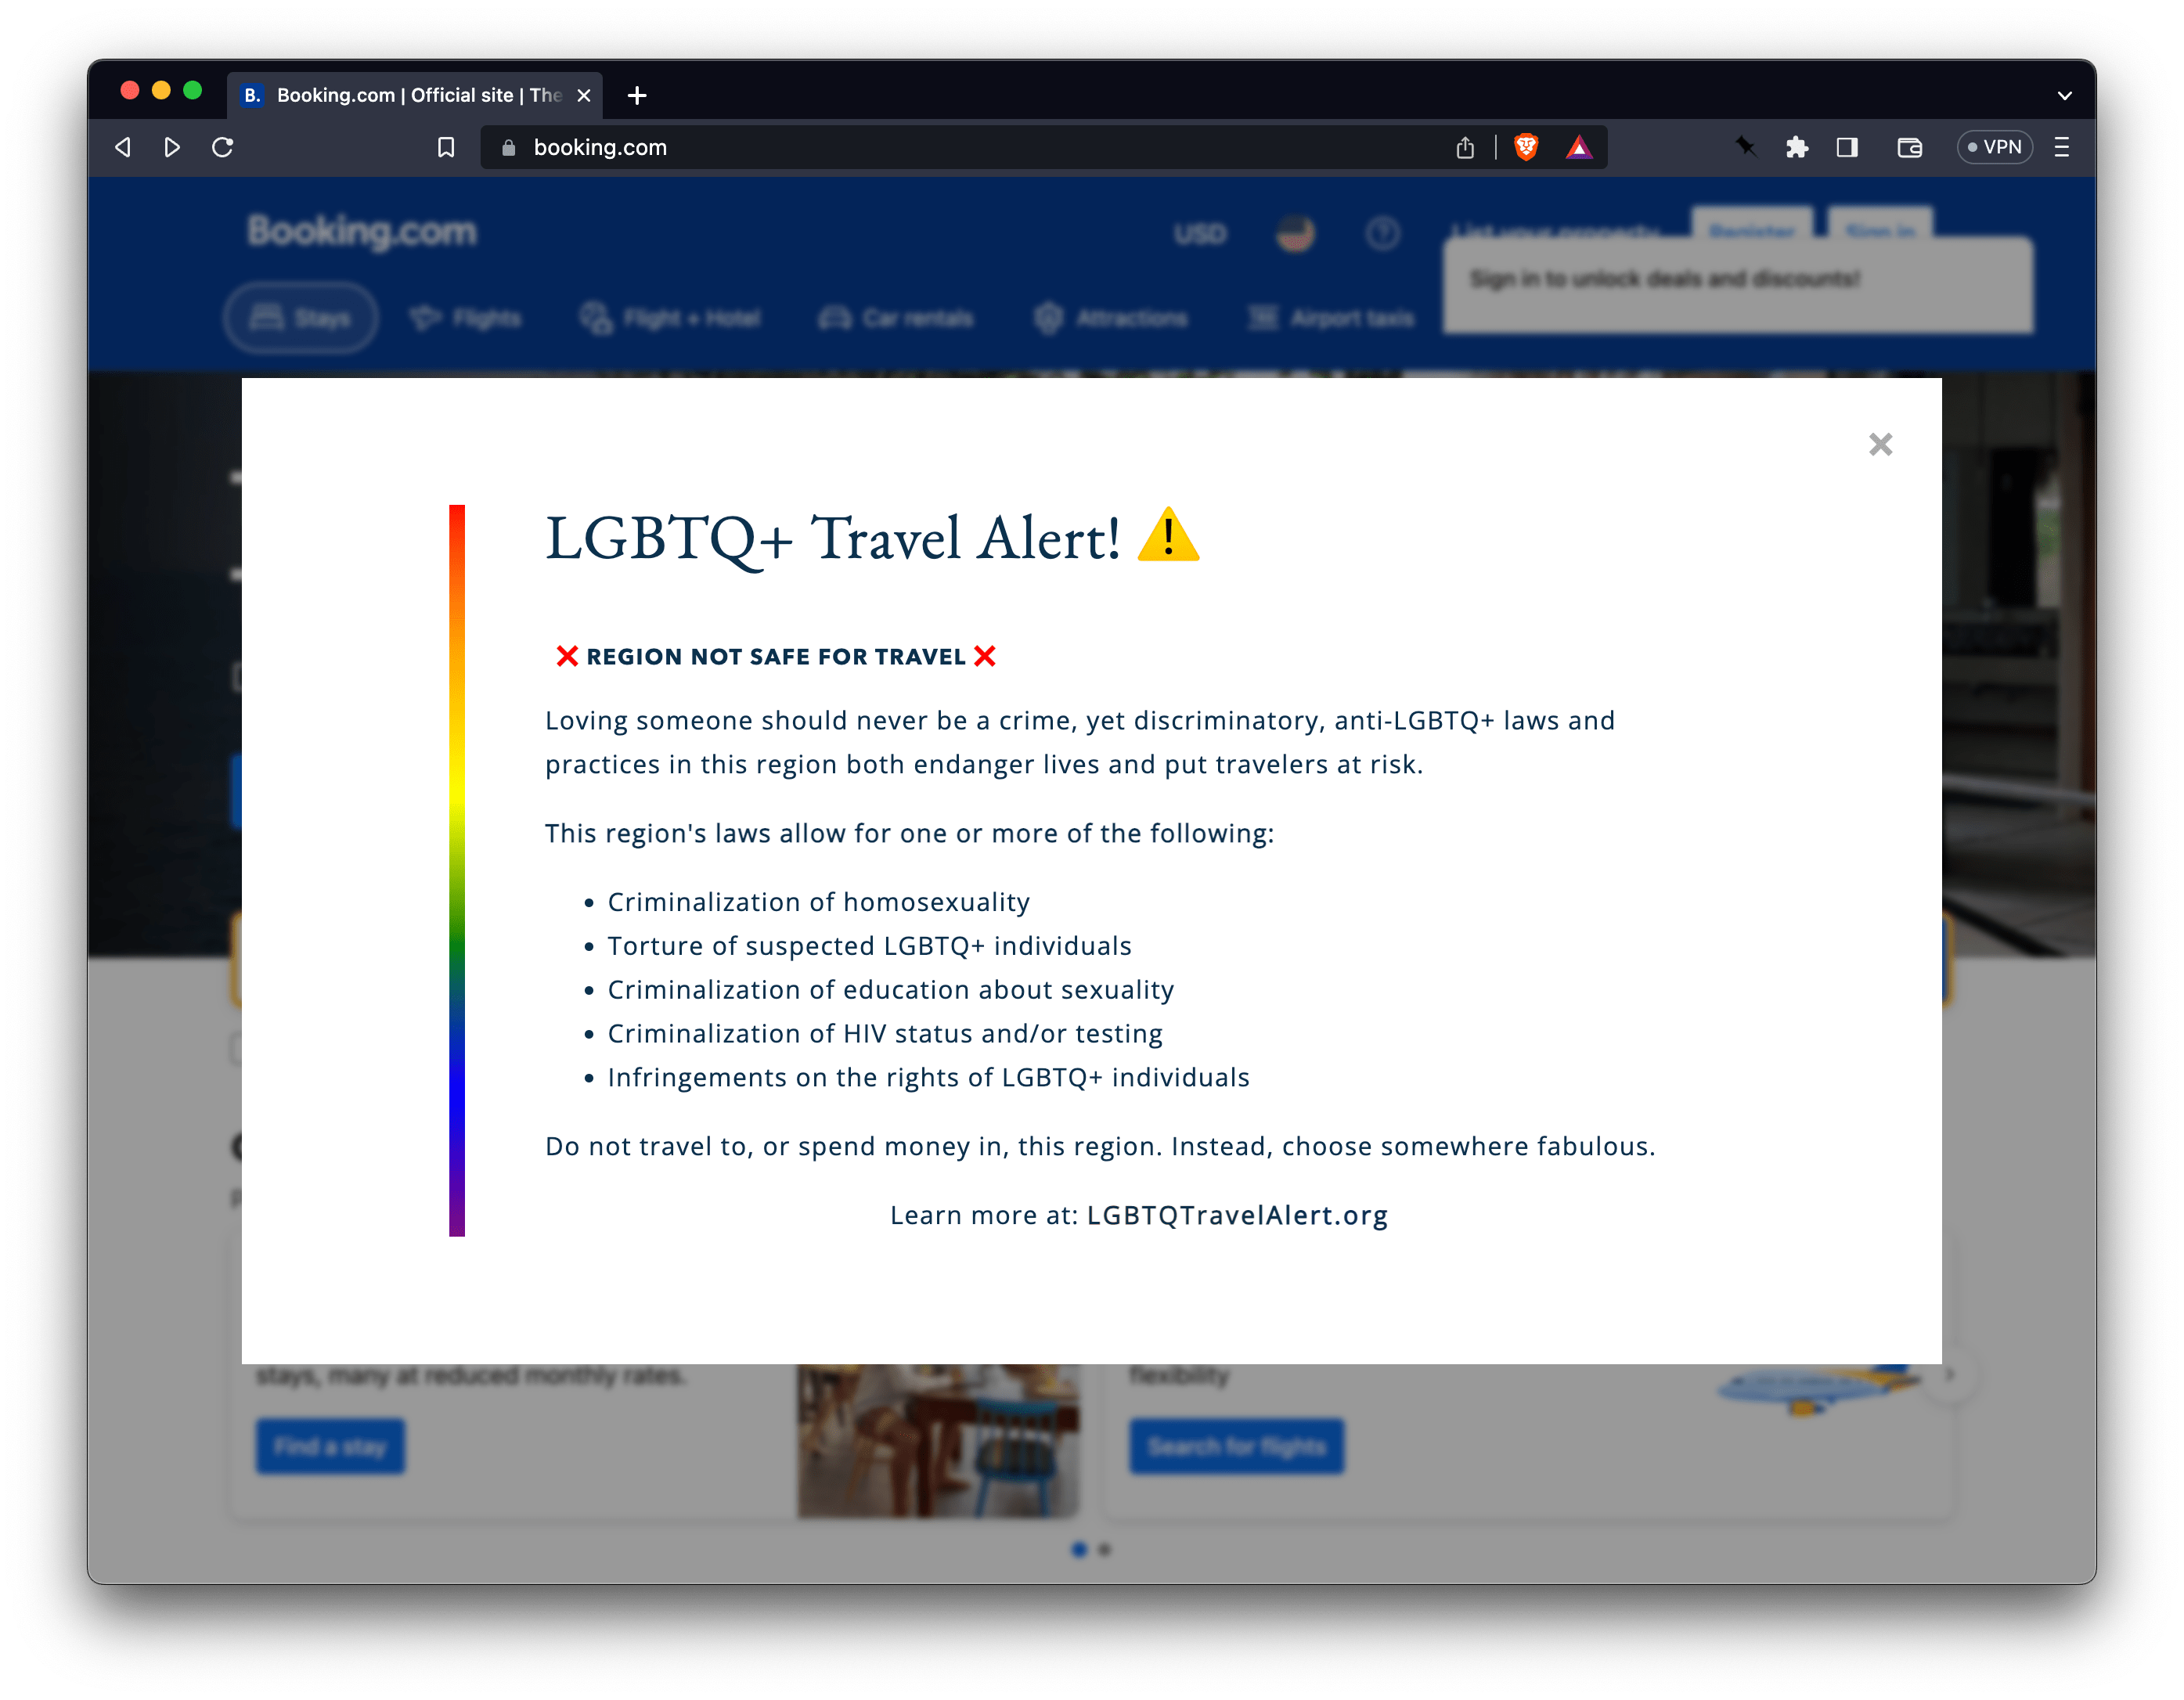 LGBTQ+ Travel Alert browser extension released